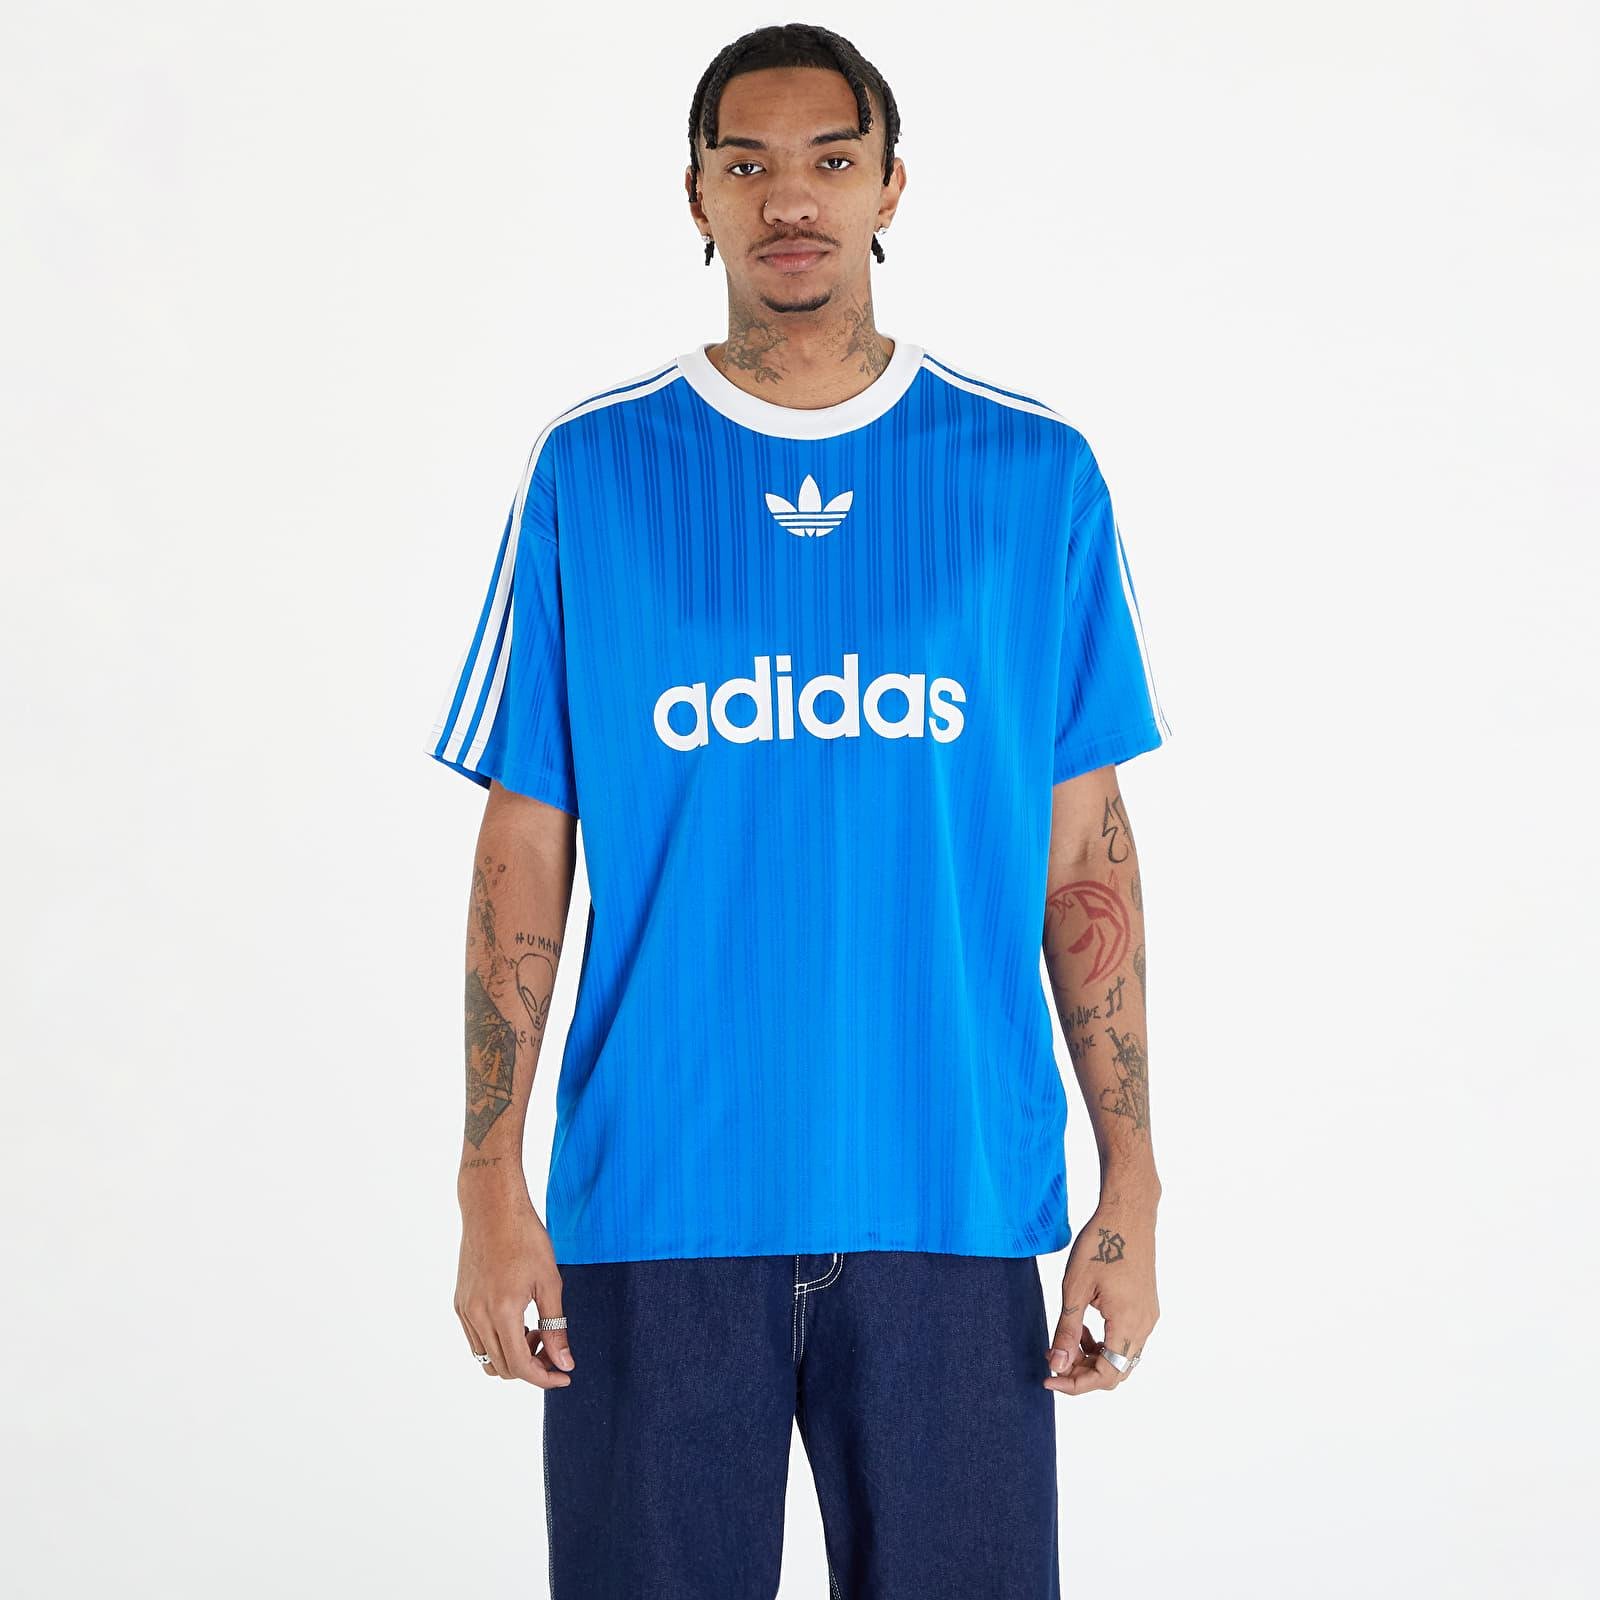 adidas Originals Adidas | Poly Tee White Blue Lyst Sleeve Short for Bird/ Adicolor in Men